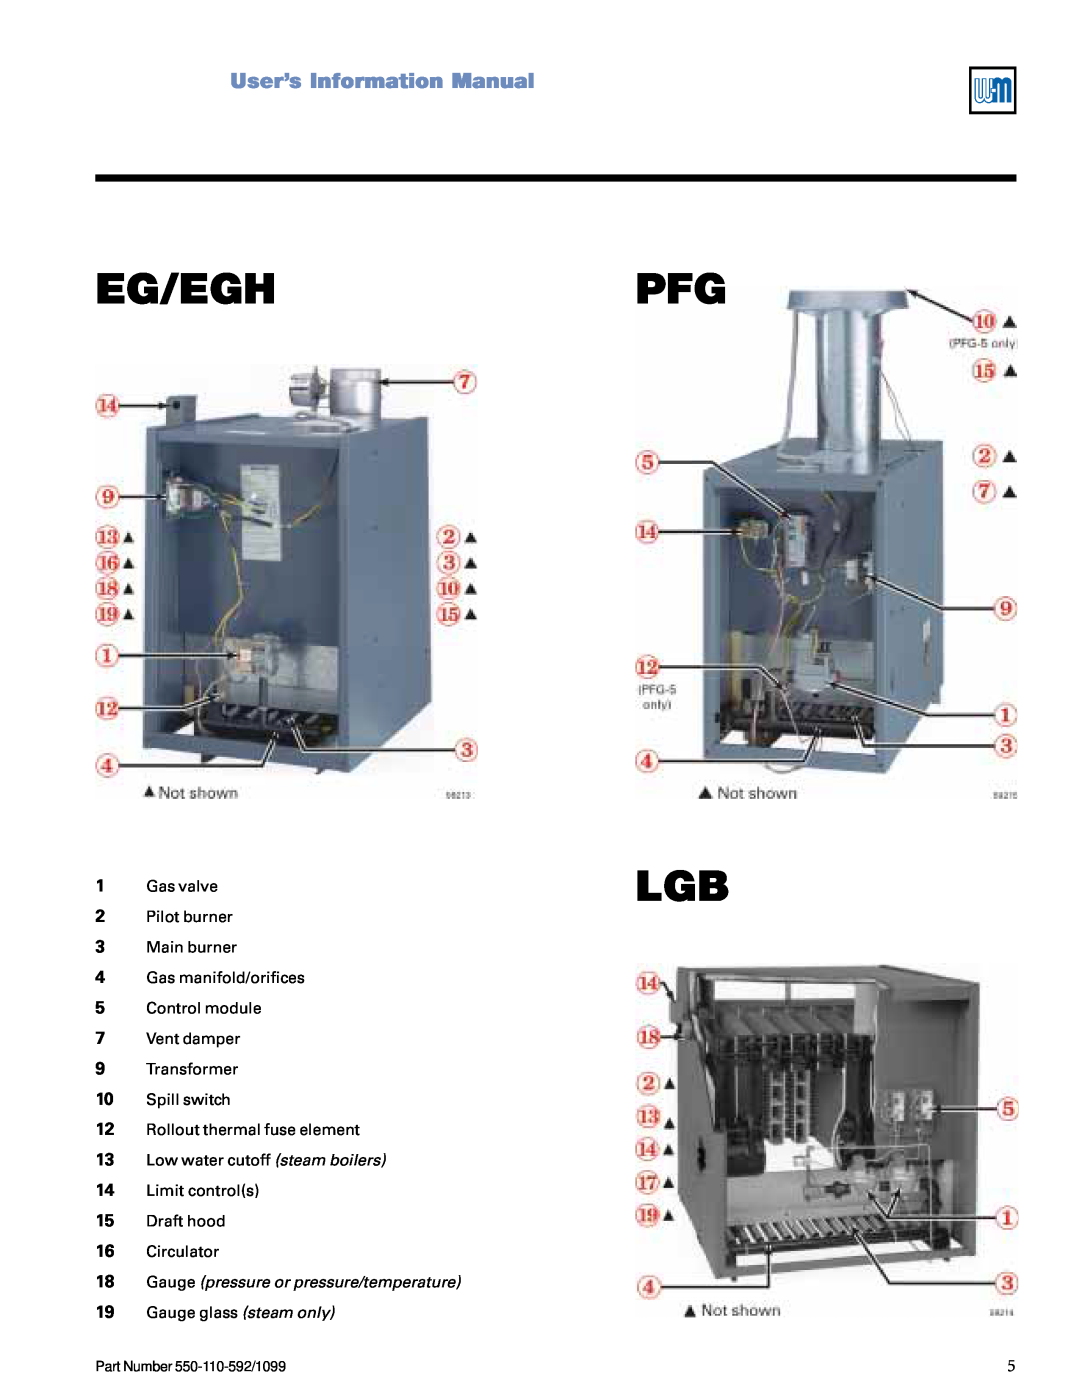 Weil-McLain CGa manual EG/EGHUserísInformationManual, Gas valve, 2Pilot burner 3Main burner 4Gas manifold/orifices 